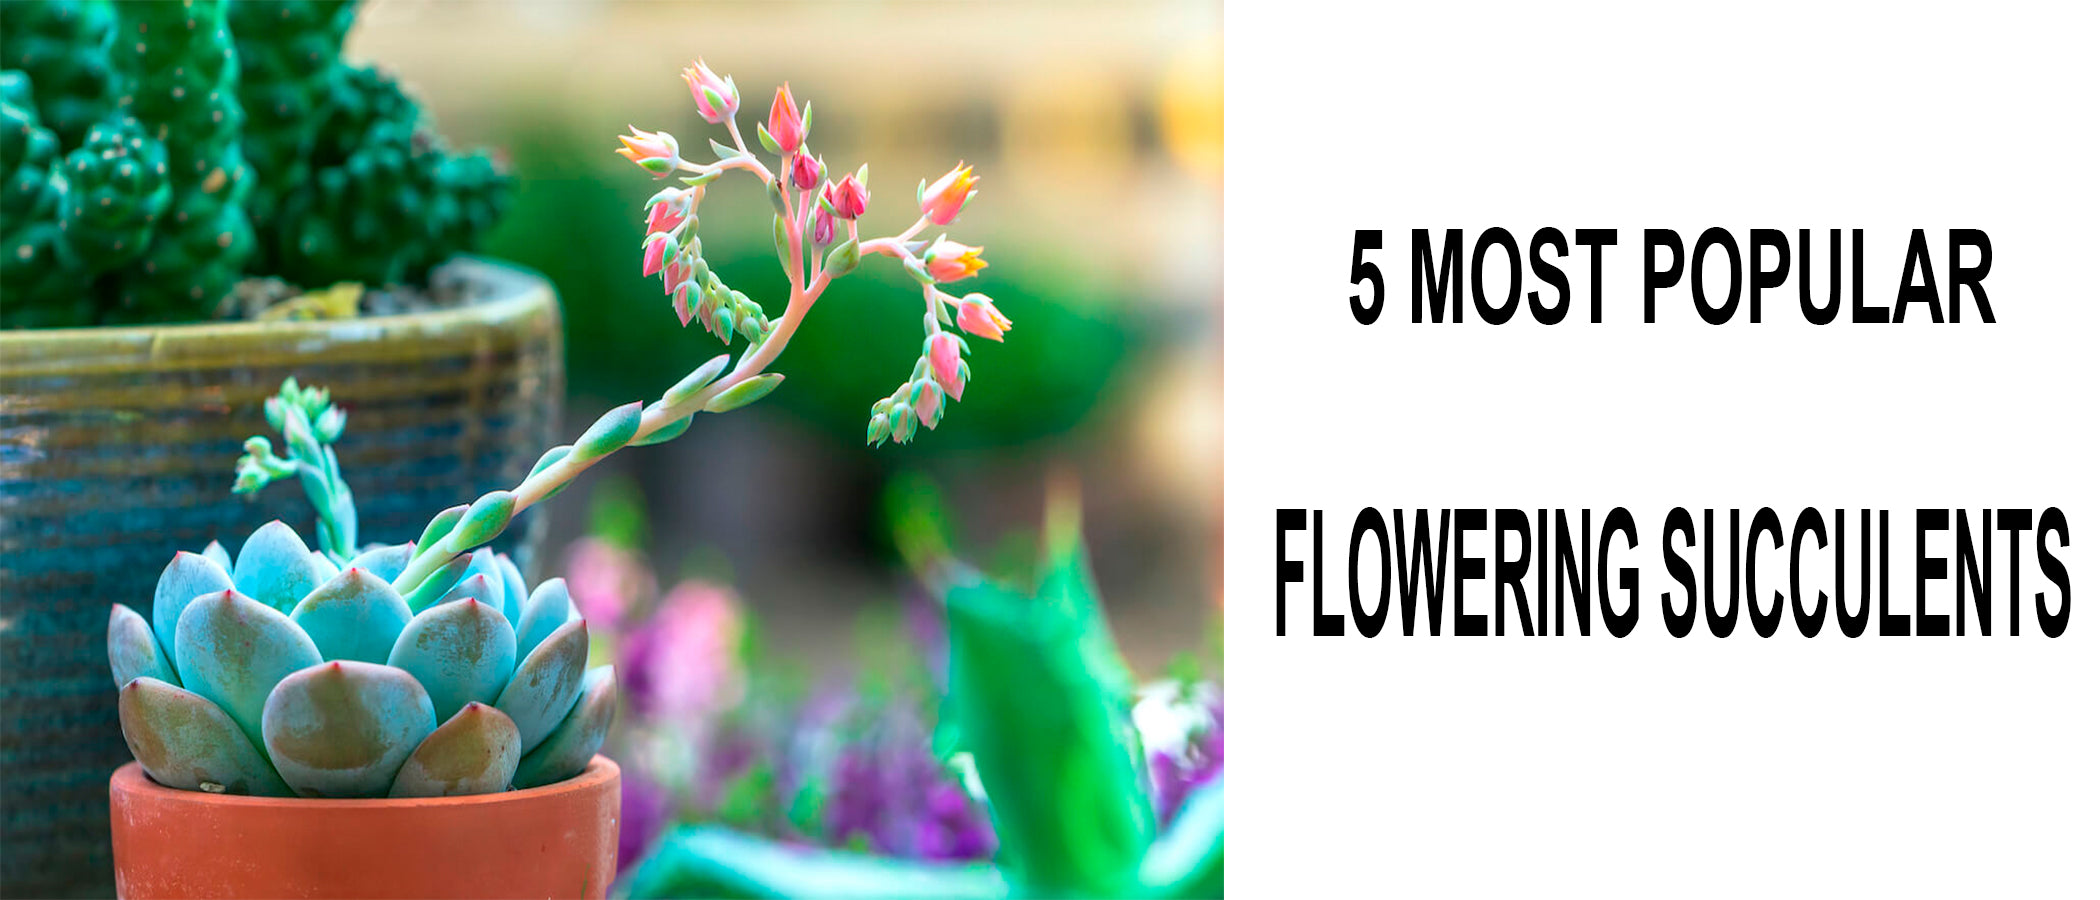 Best Easy Flowering Succulents - Most Beautiful Succulents